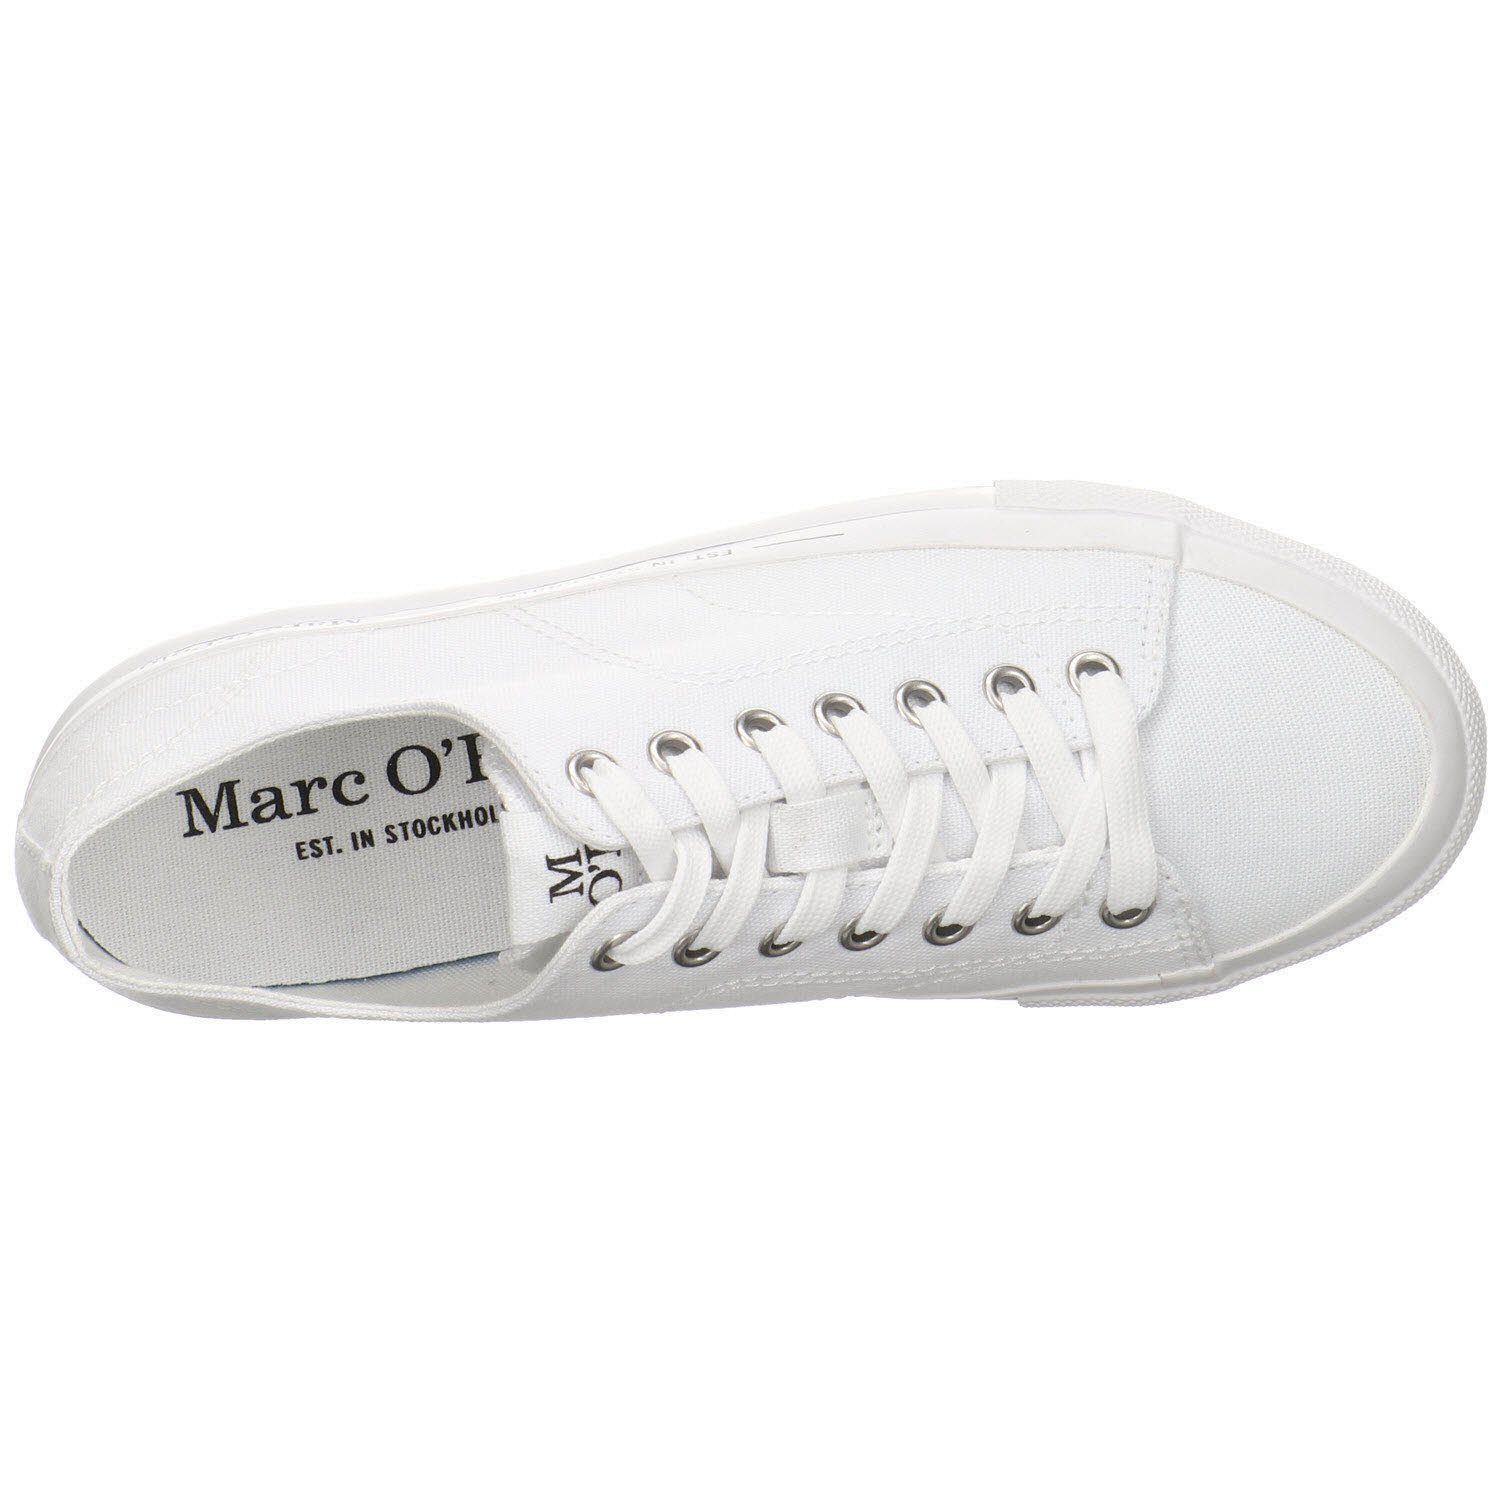 Marc O'Polo Damen Sneaker Schuhe Schnürschuh Halbschuhe Sport white Sneaker Textil